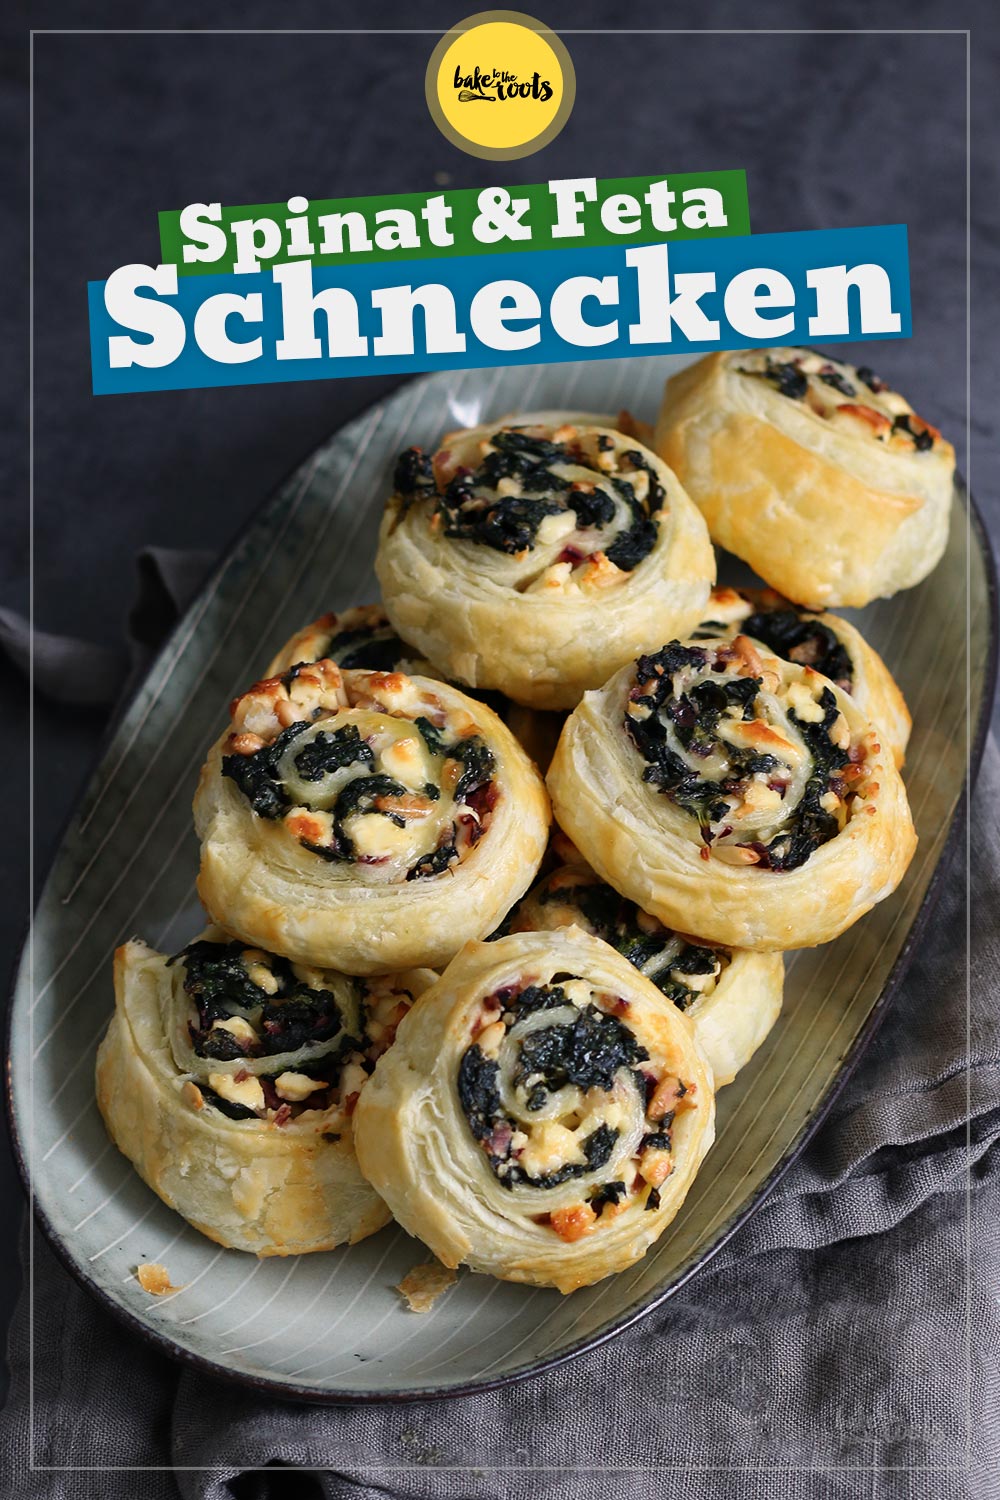 Spinat & Feta Schnecken | Bake to the roots